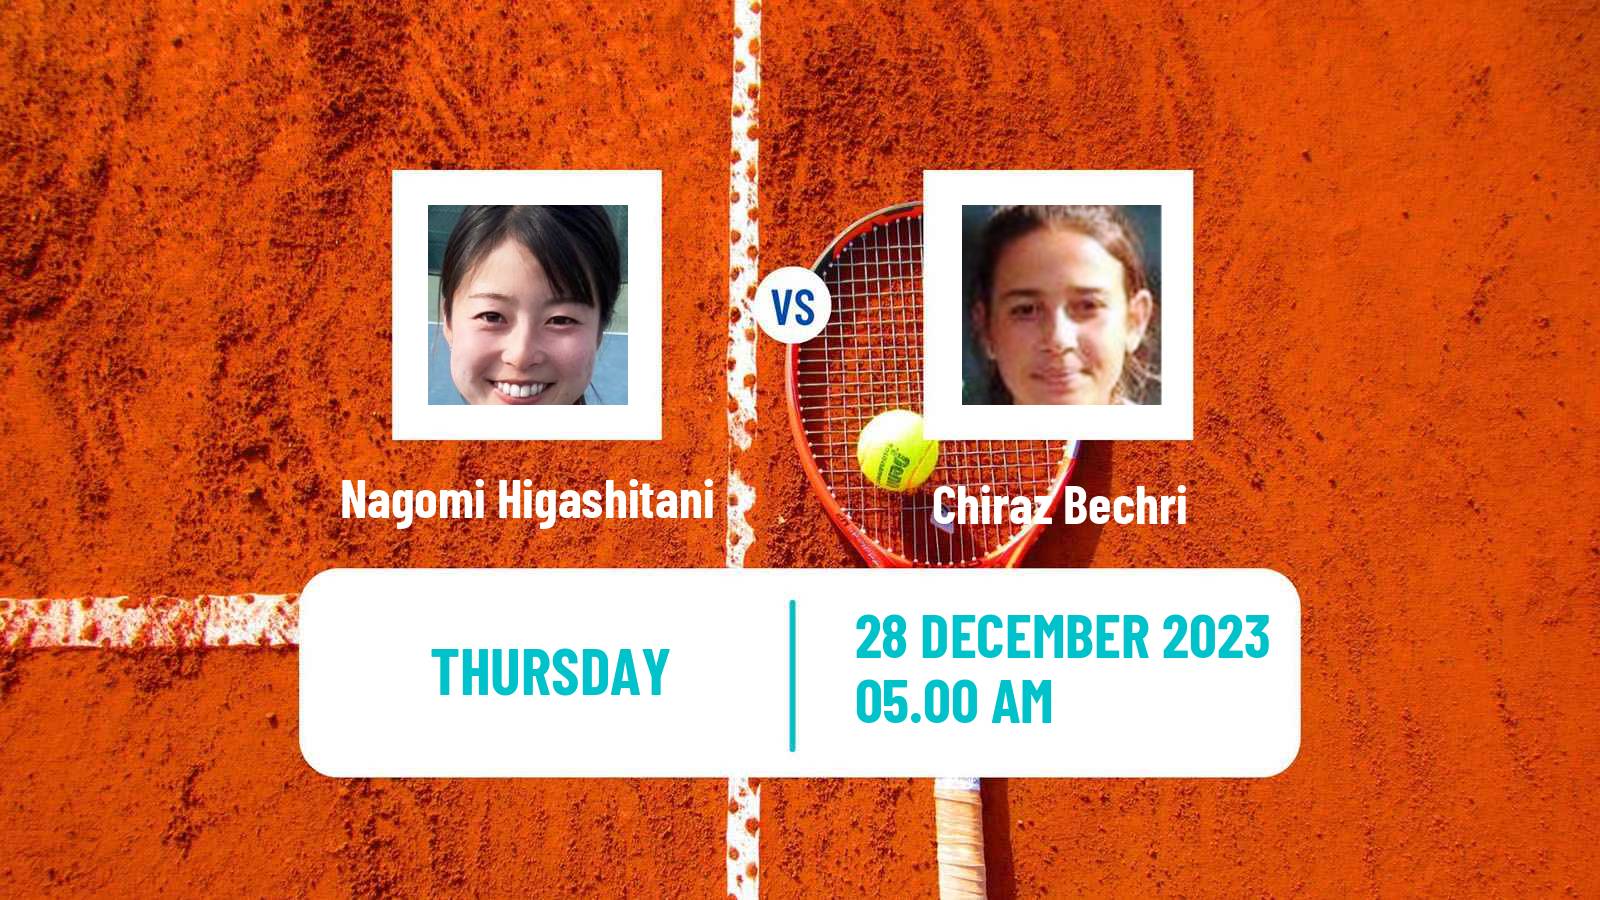 Tennis ITF W15 Monastir 44 Women Nagomi Higashitani - Chiraz Bechri